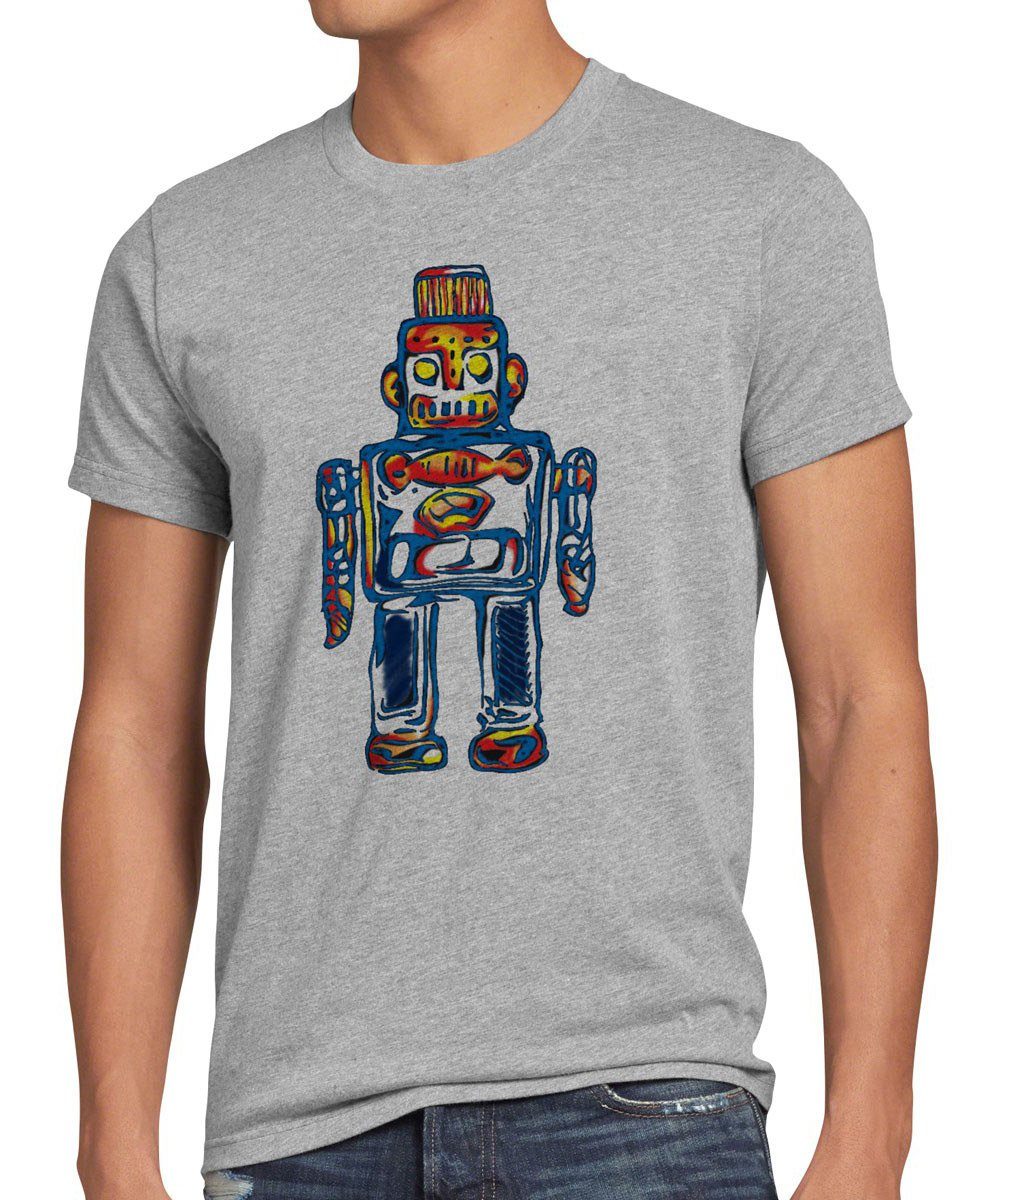 Jetzt versandkostenfrei! style3 Print-Shirt Herren T-Shirt bang meliert Toy cooper Sheldon tbbt spielzeug big Leonard Roboter Robot grau